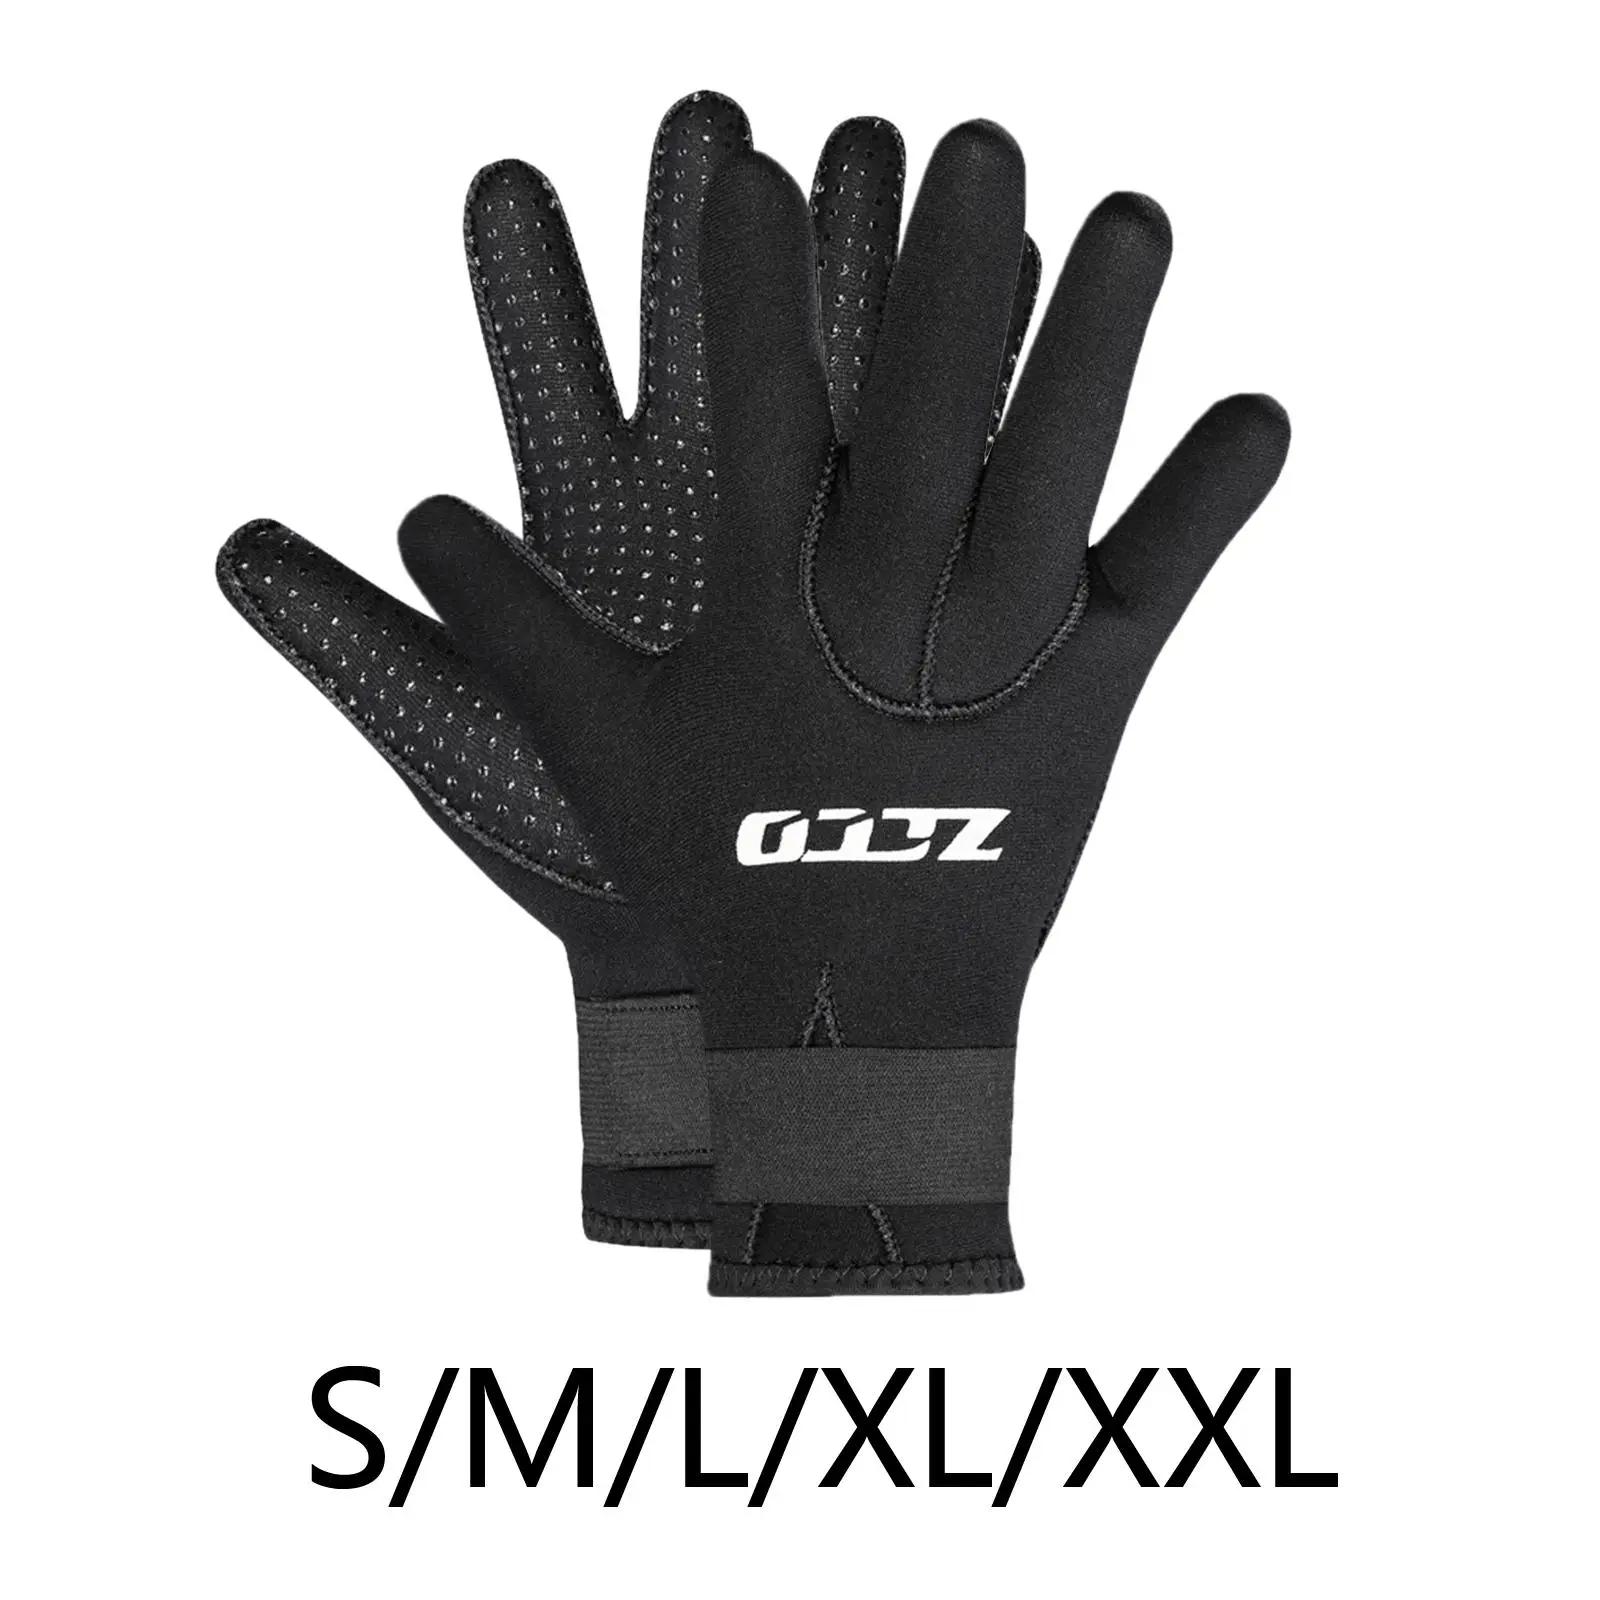 3mm Neoprene Wetsuit Gloves Cold Proof Wear Resistant Diving Gloves for Kayaking Black